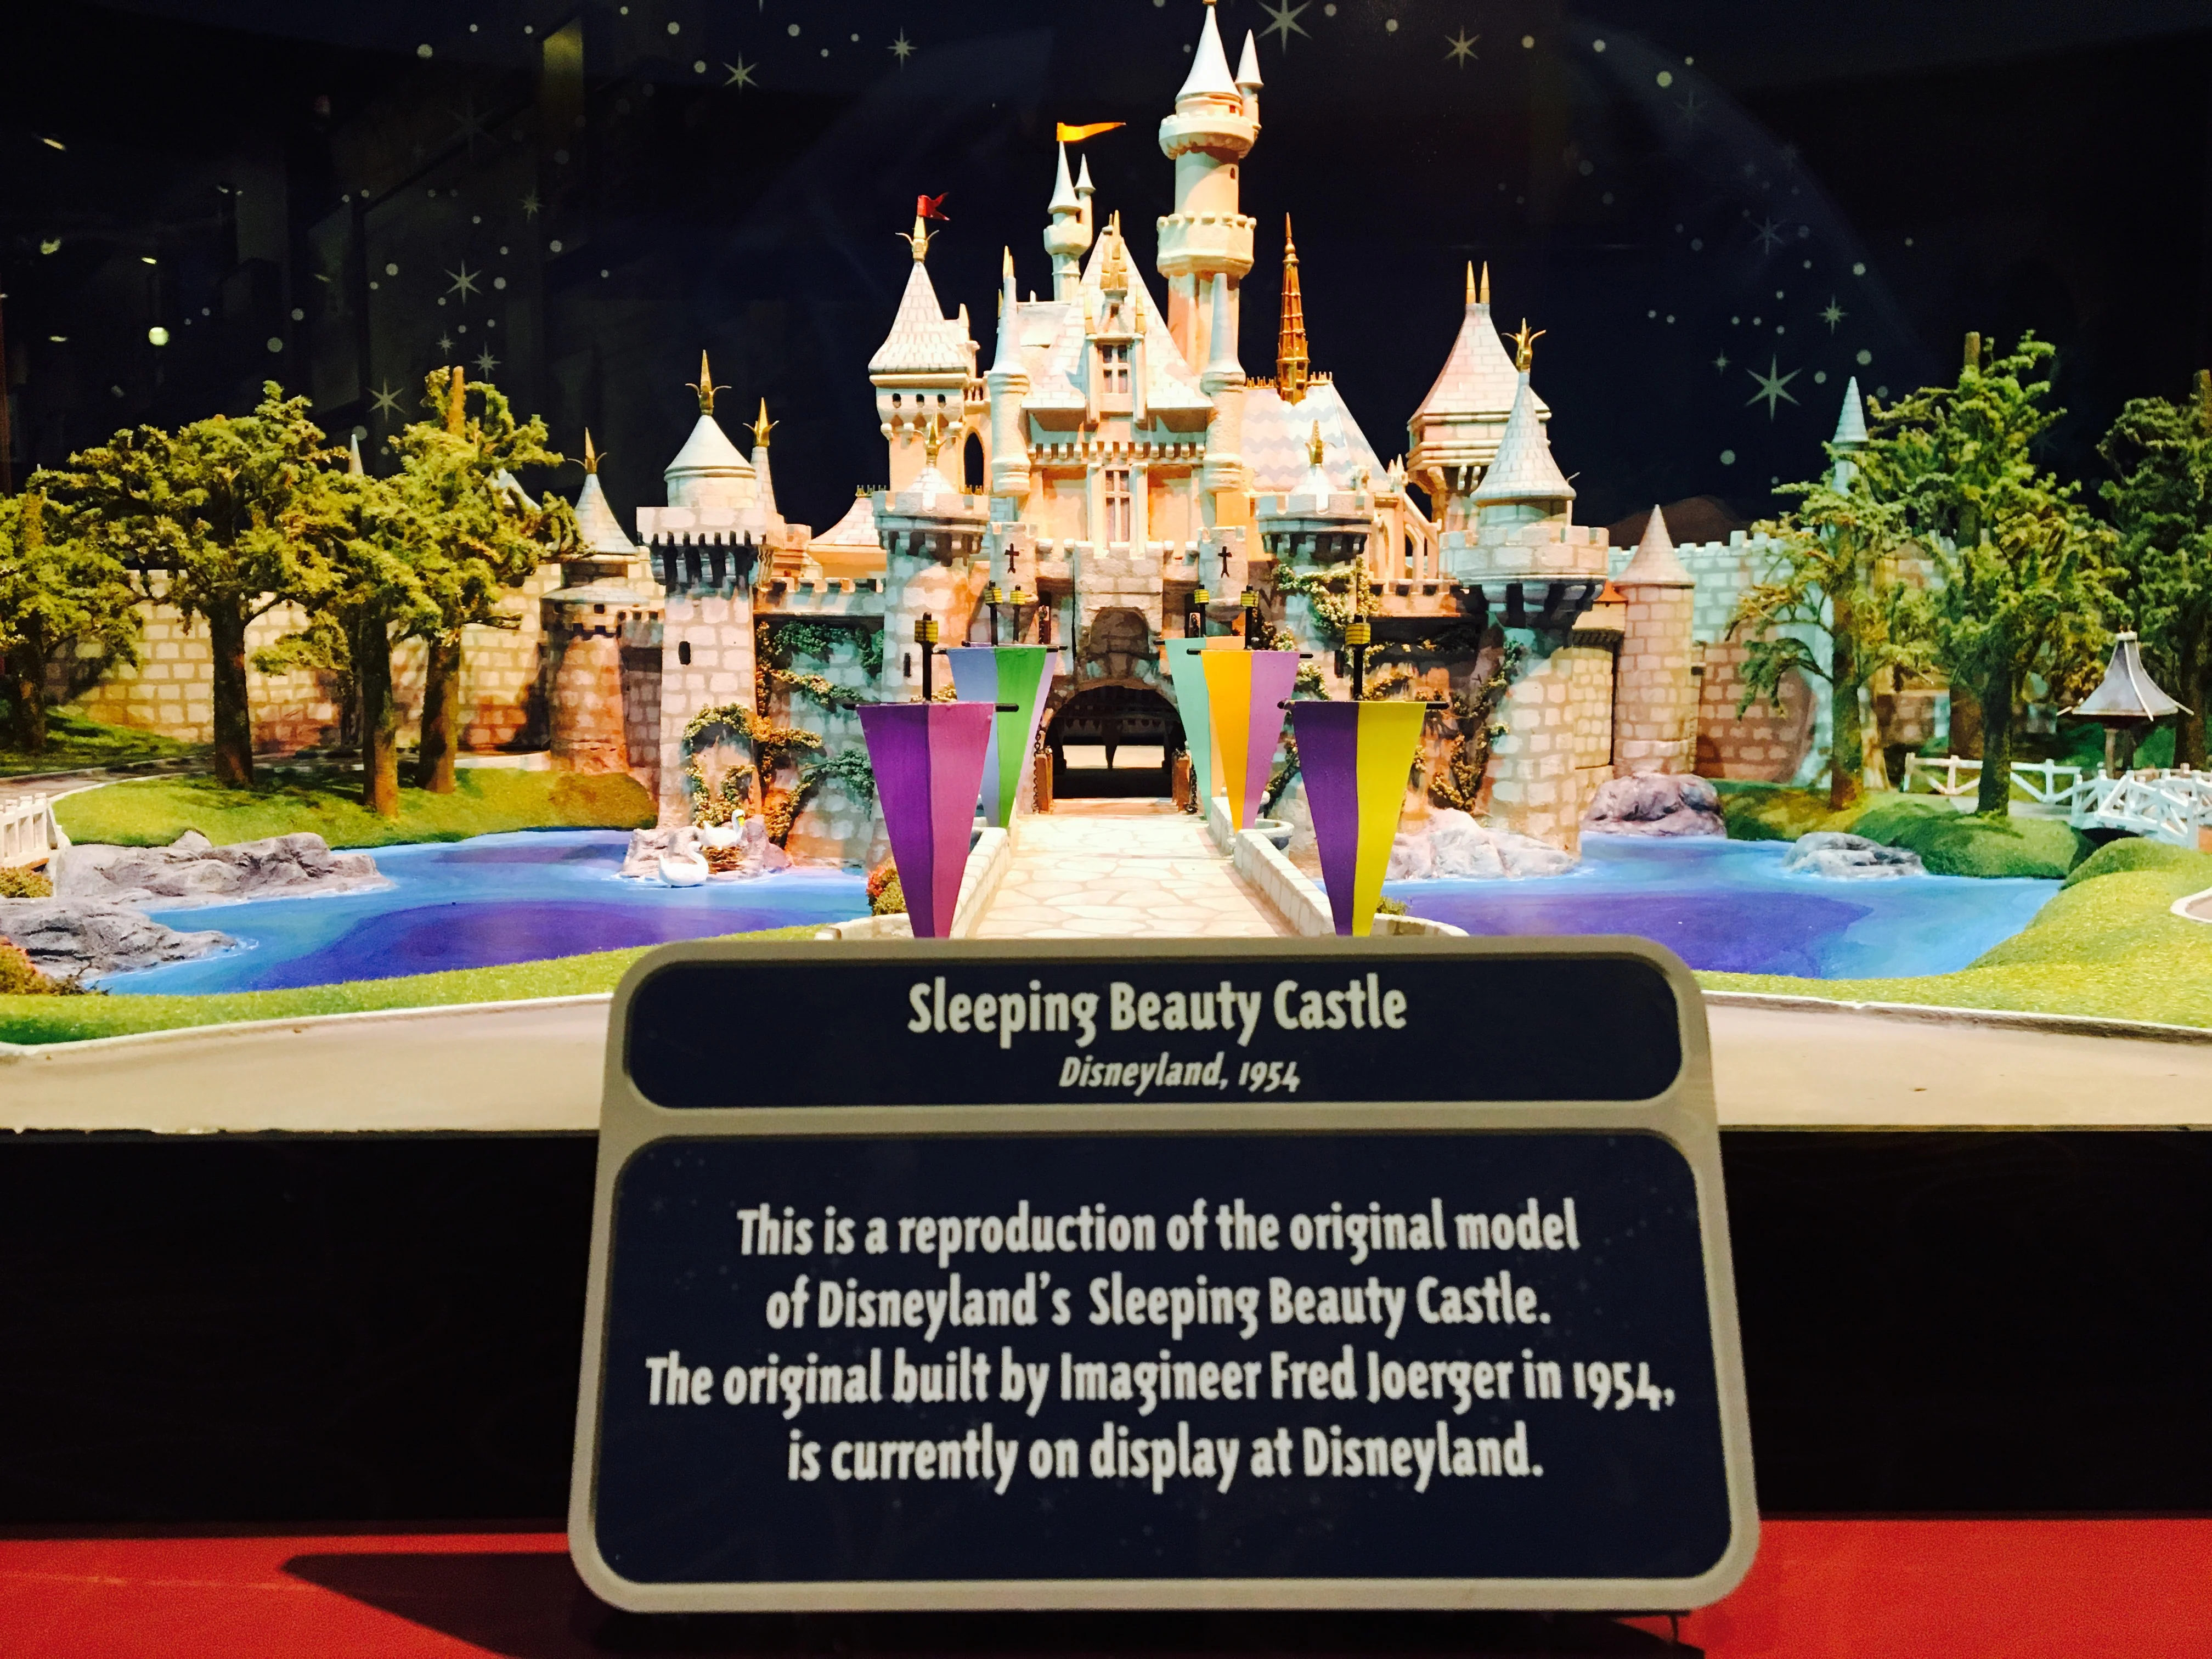 Walt Disney Presents reopens at Hollywood Studios